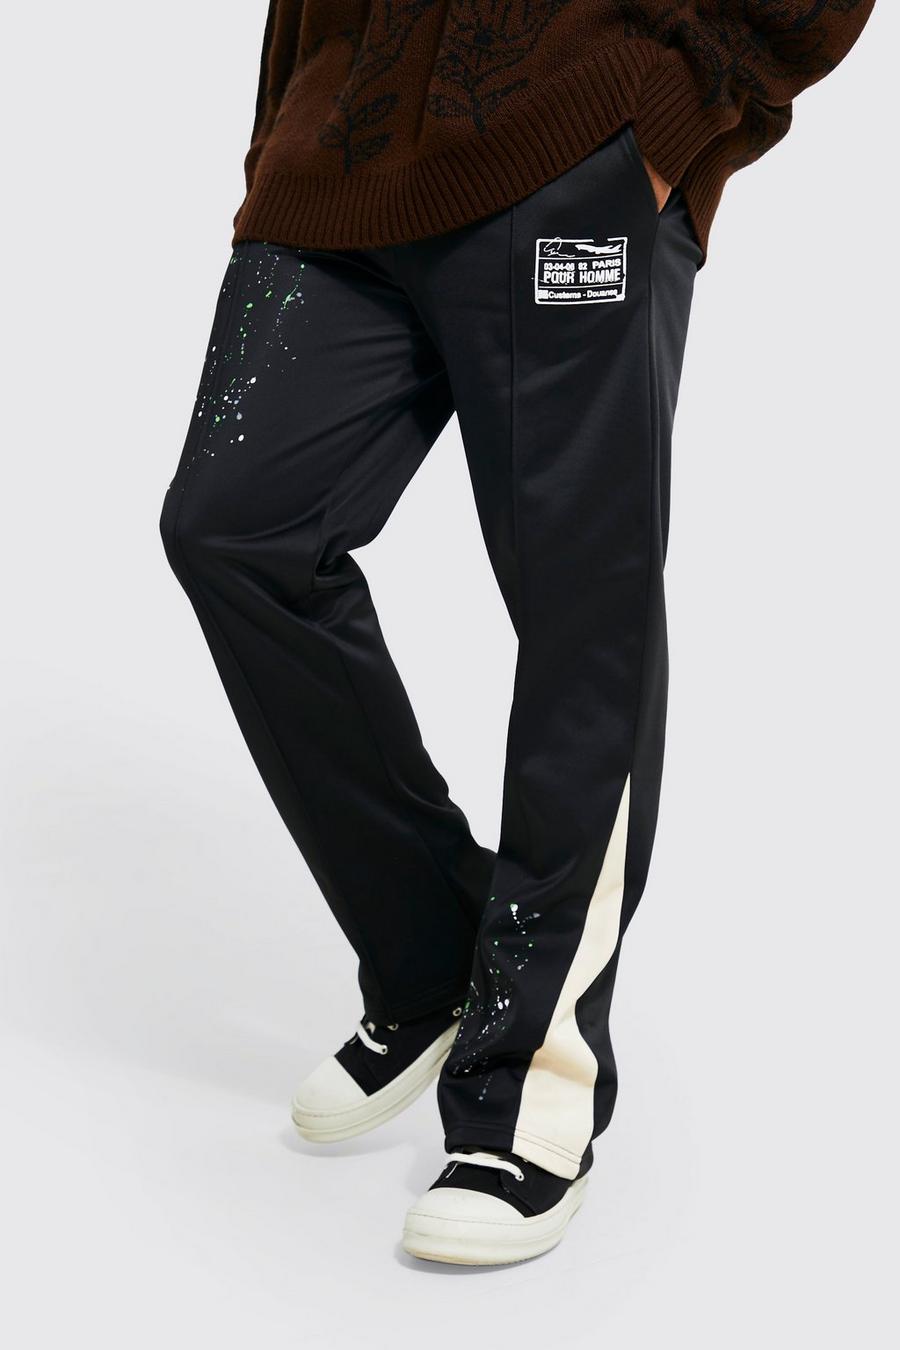 Pantalón deportivo Regular de tejido por urdimbre con refuerzos, Black